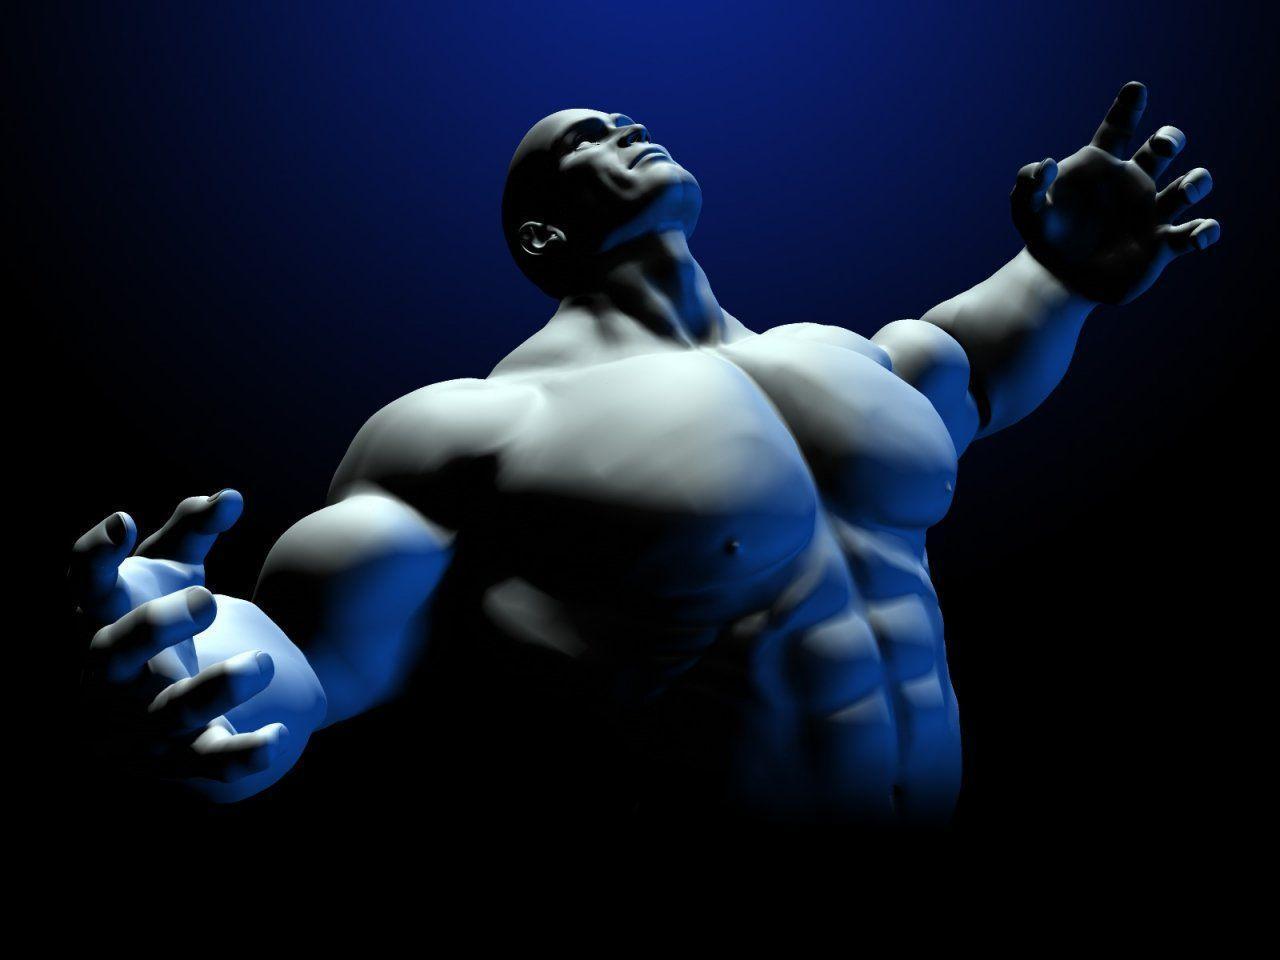 Muscle Man Wallpaper Download Digital Art Wallpaper Gallery PC